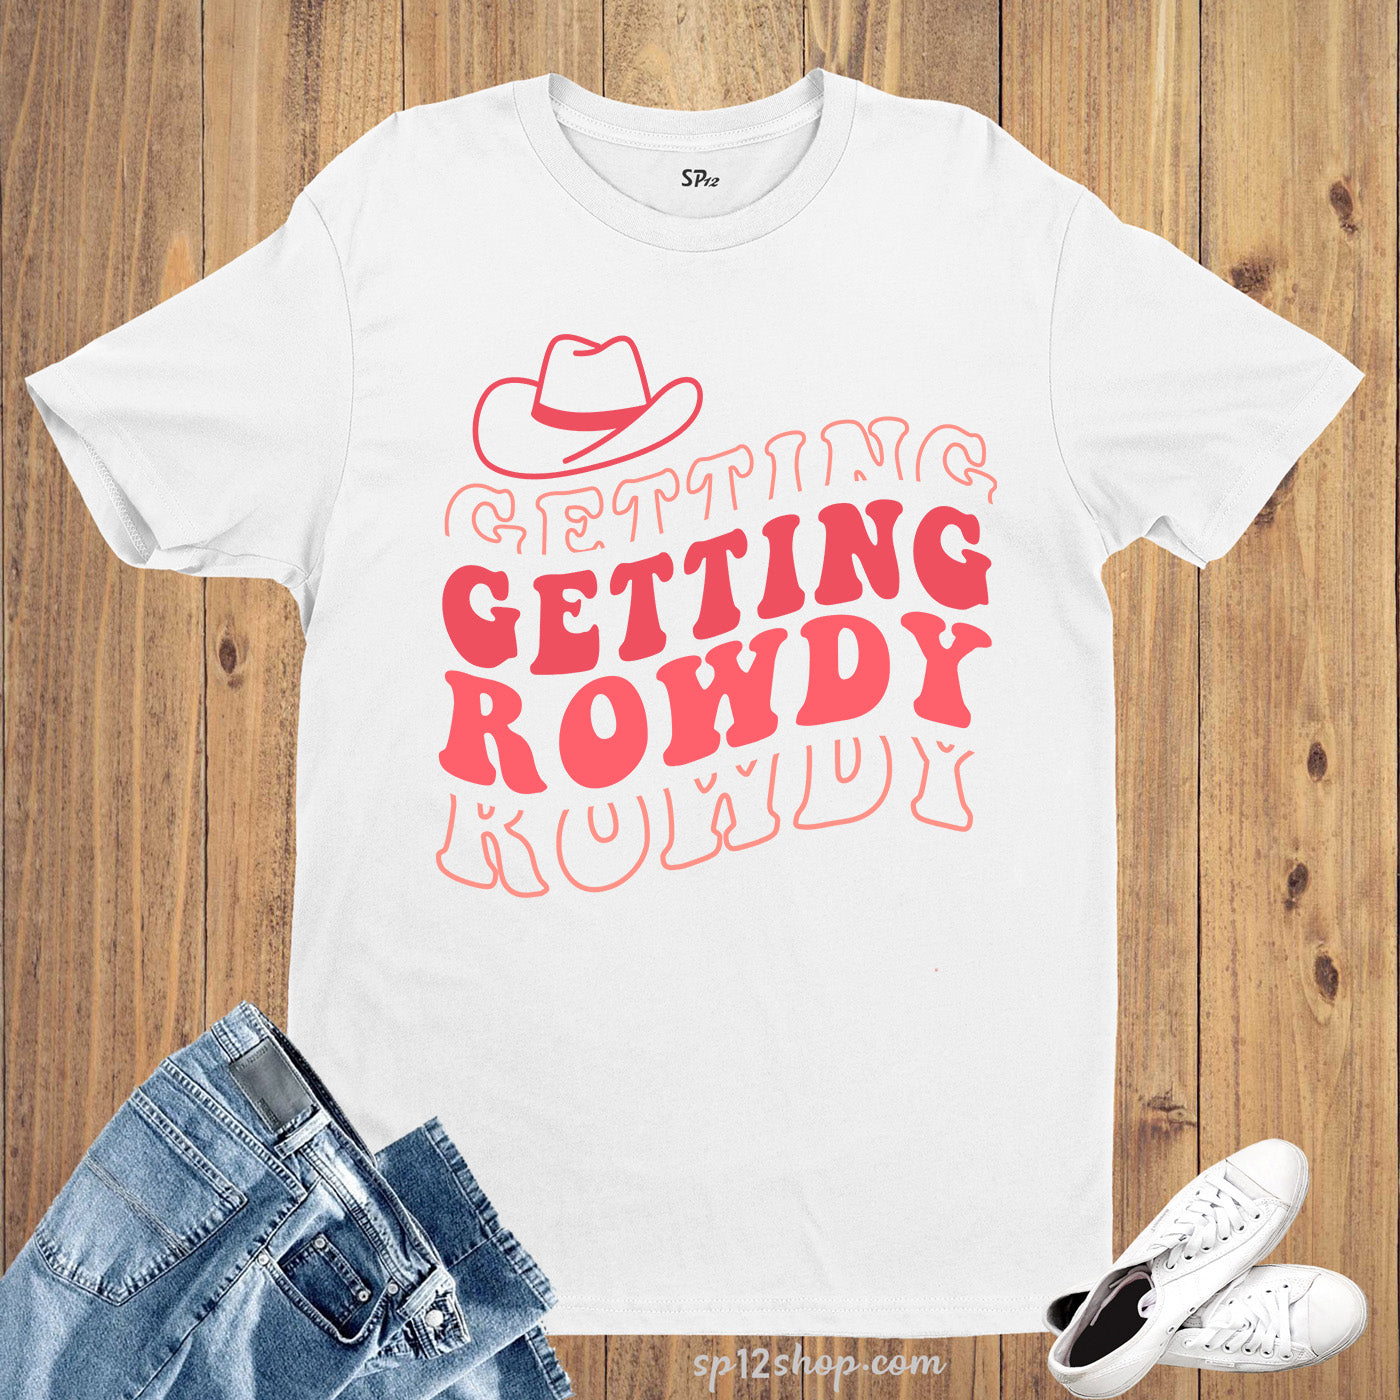 Getting Rowdy Western Bachelorette Party Shirt